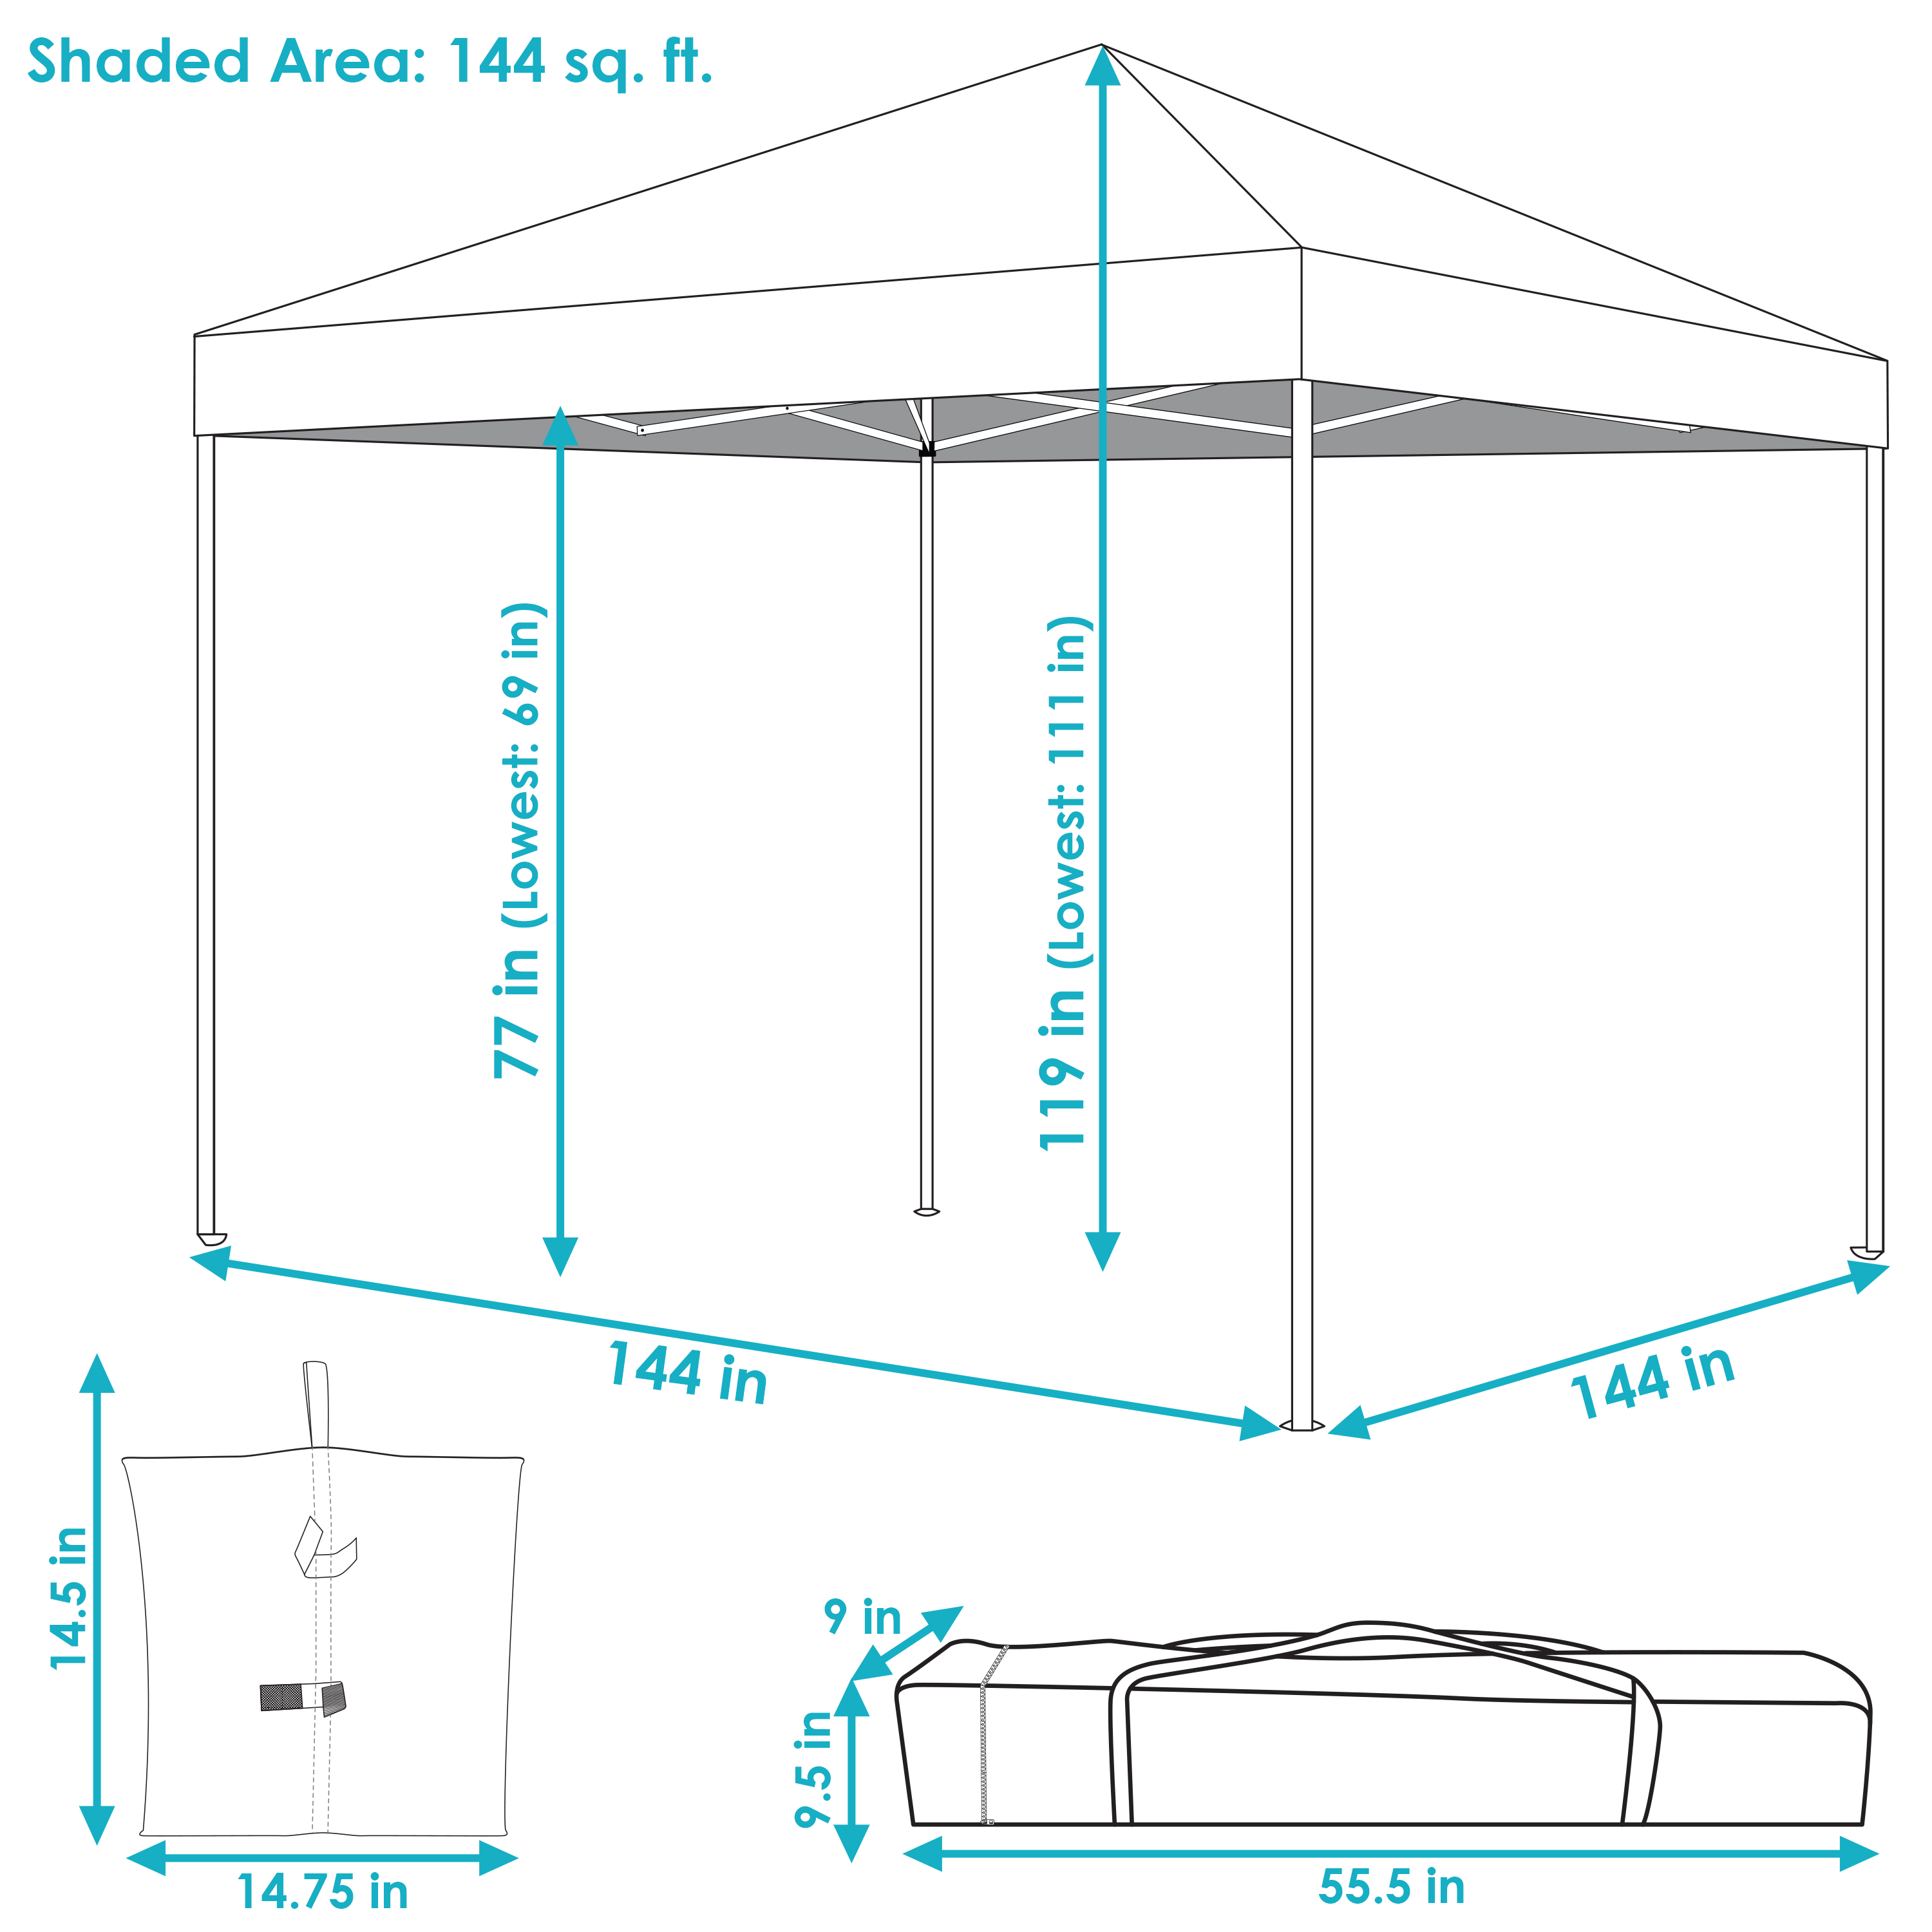 Sunnydaze Decor 12x12 Foot Standard Pop-Up Canopy with Bag/Sandbags - Gray